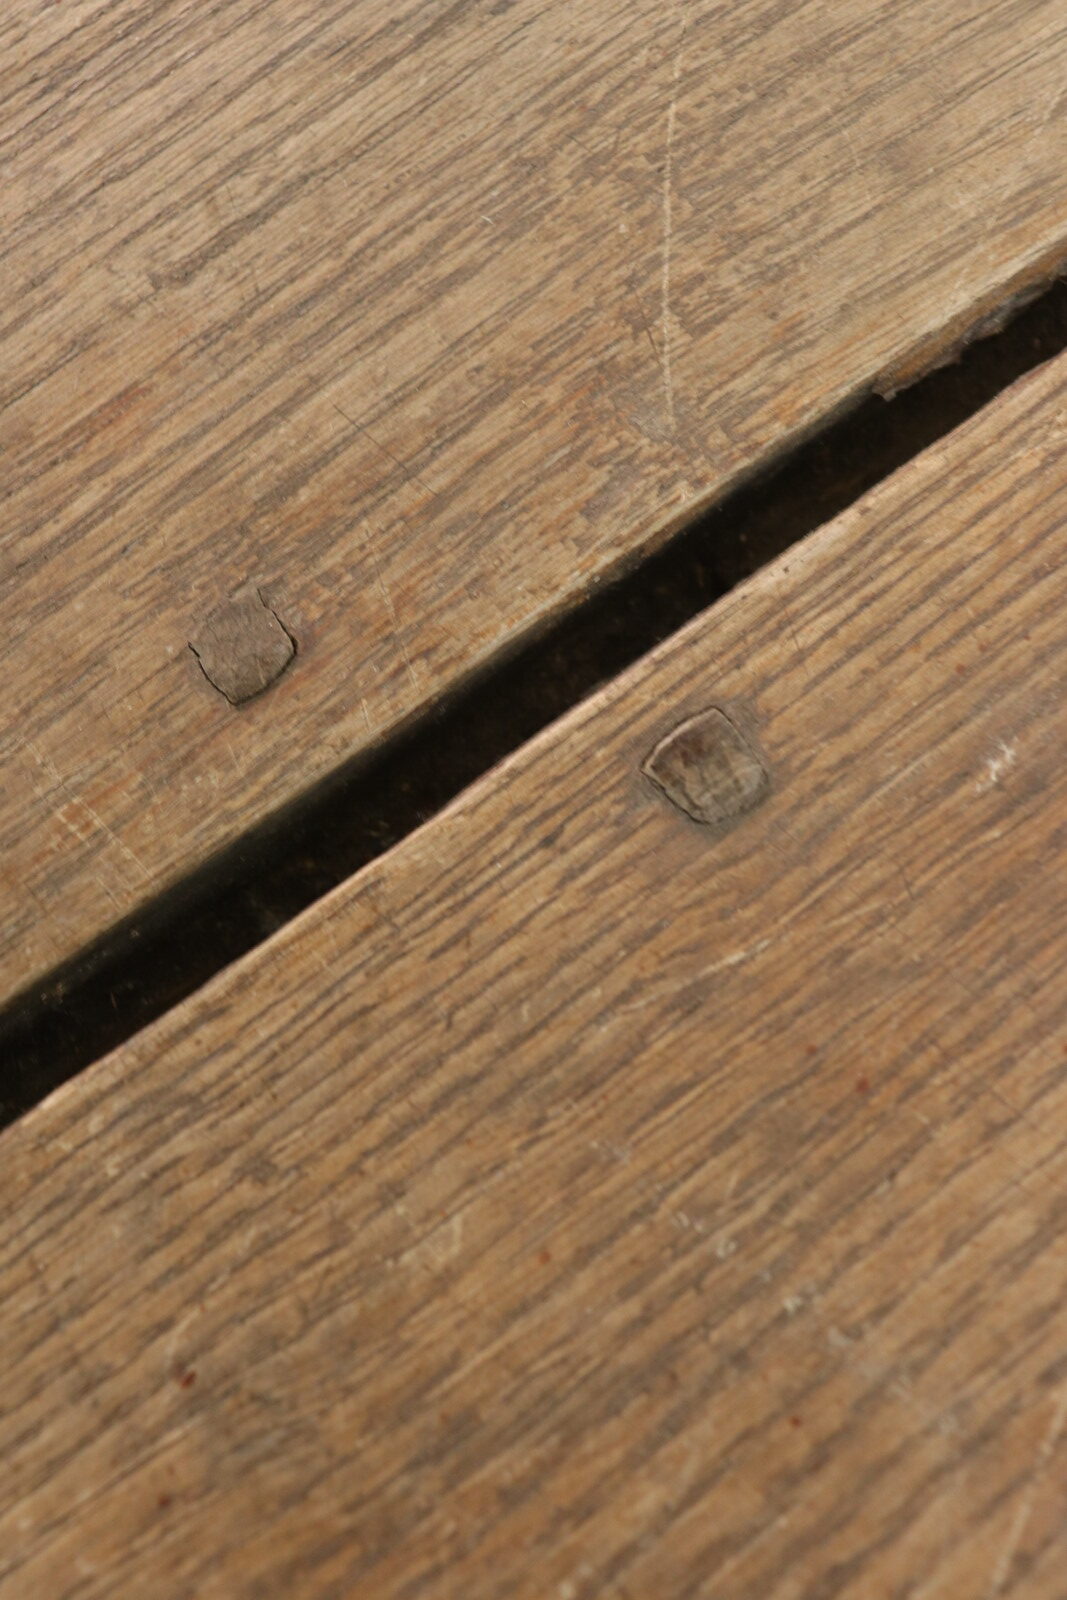 1940's,france,antique,table,oak wood table,